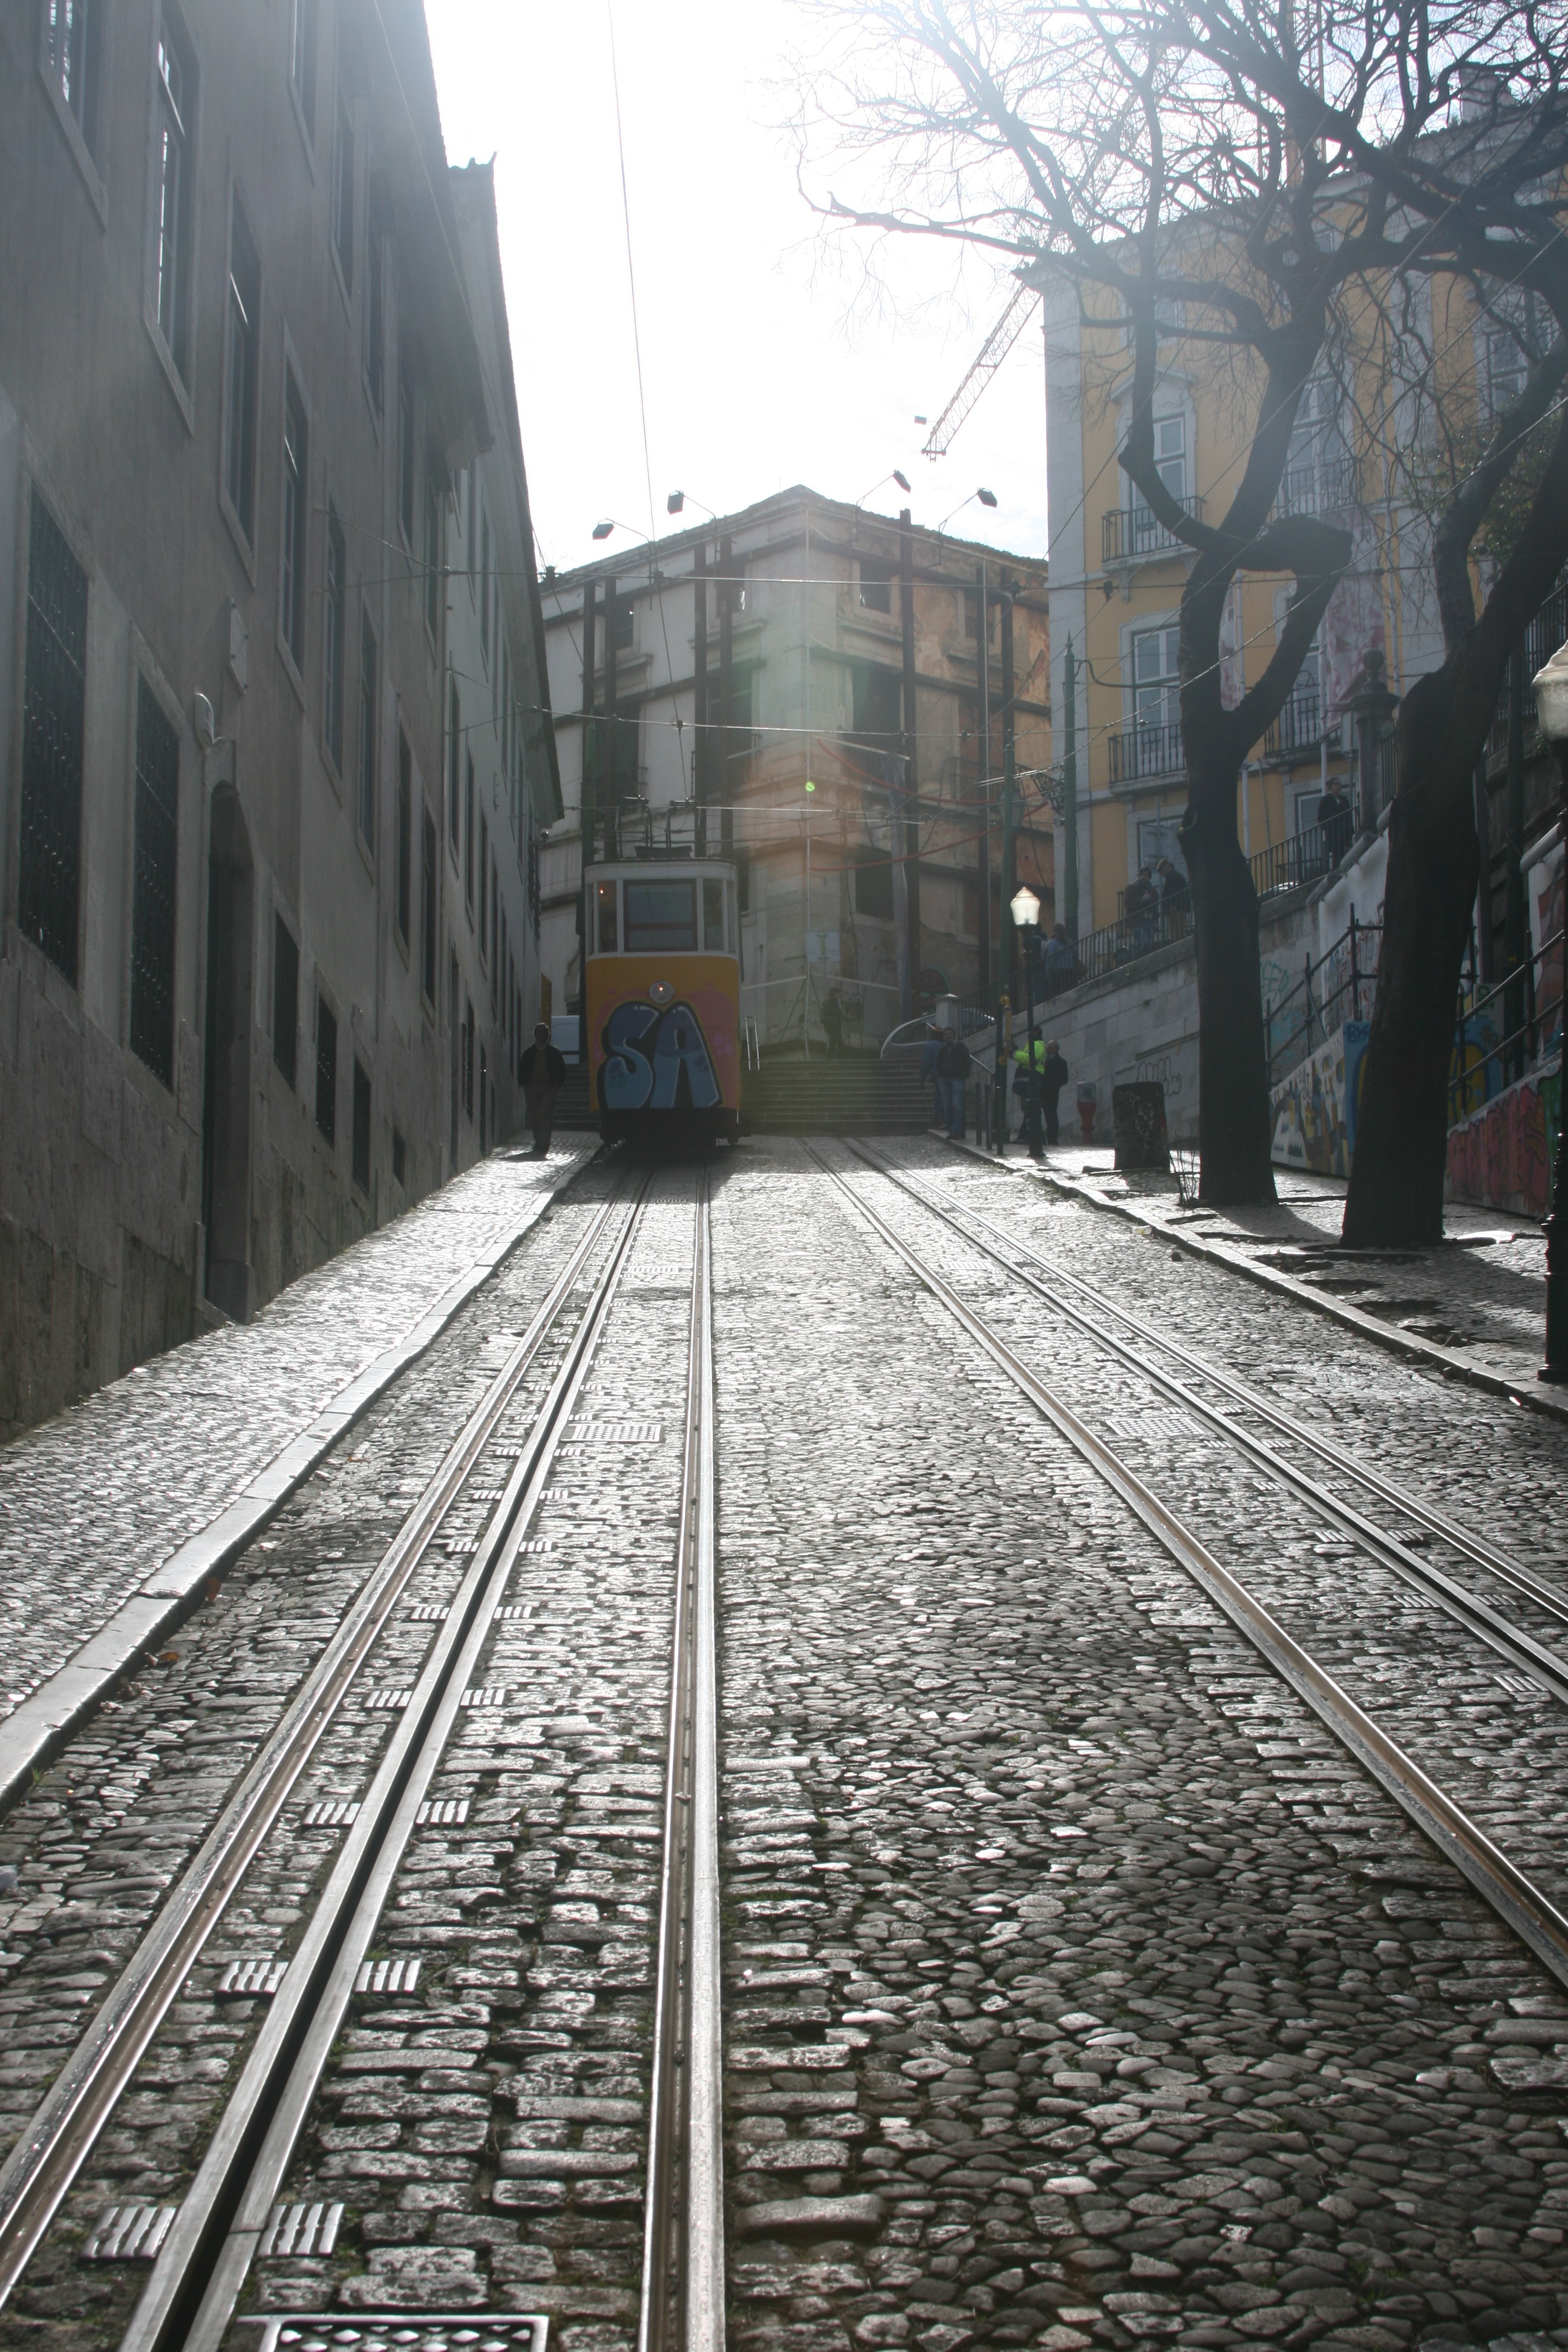 Ascensor da Bica in Lissabon Stadtseilbahn